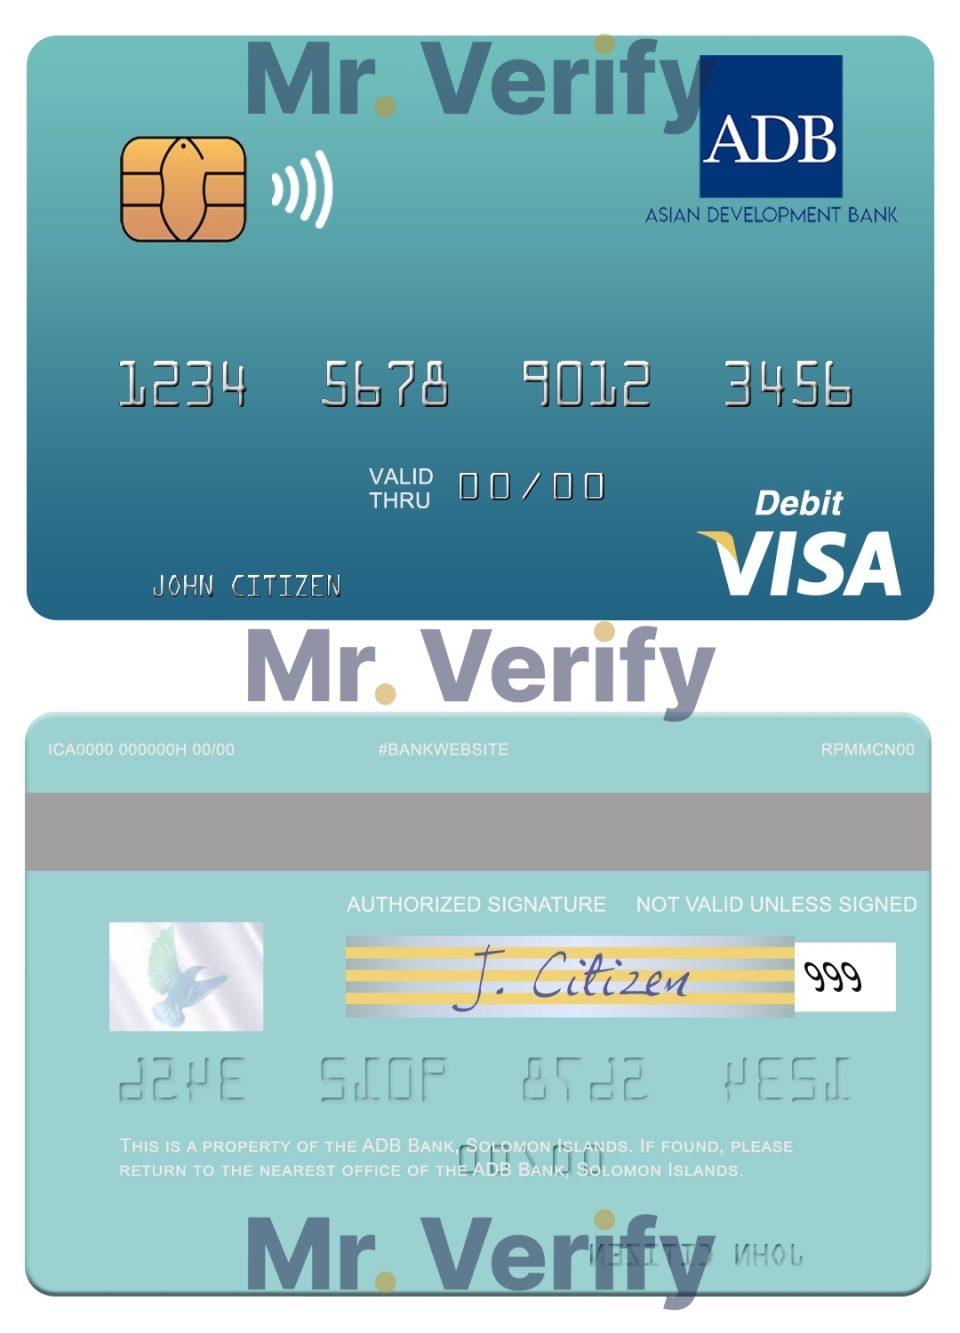 Editable Solomon Islands ADB Bank visa debit card Templates in PSD Format